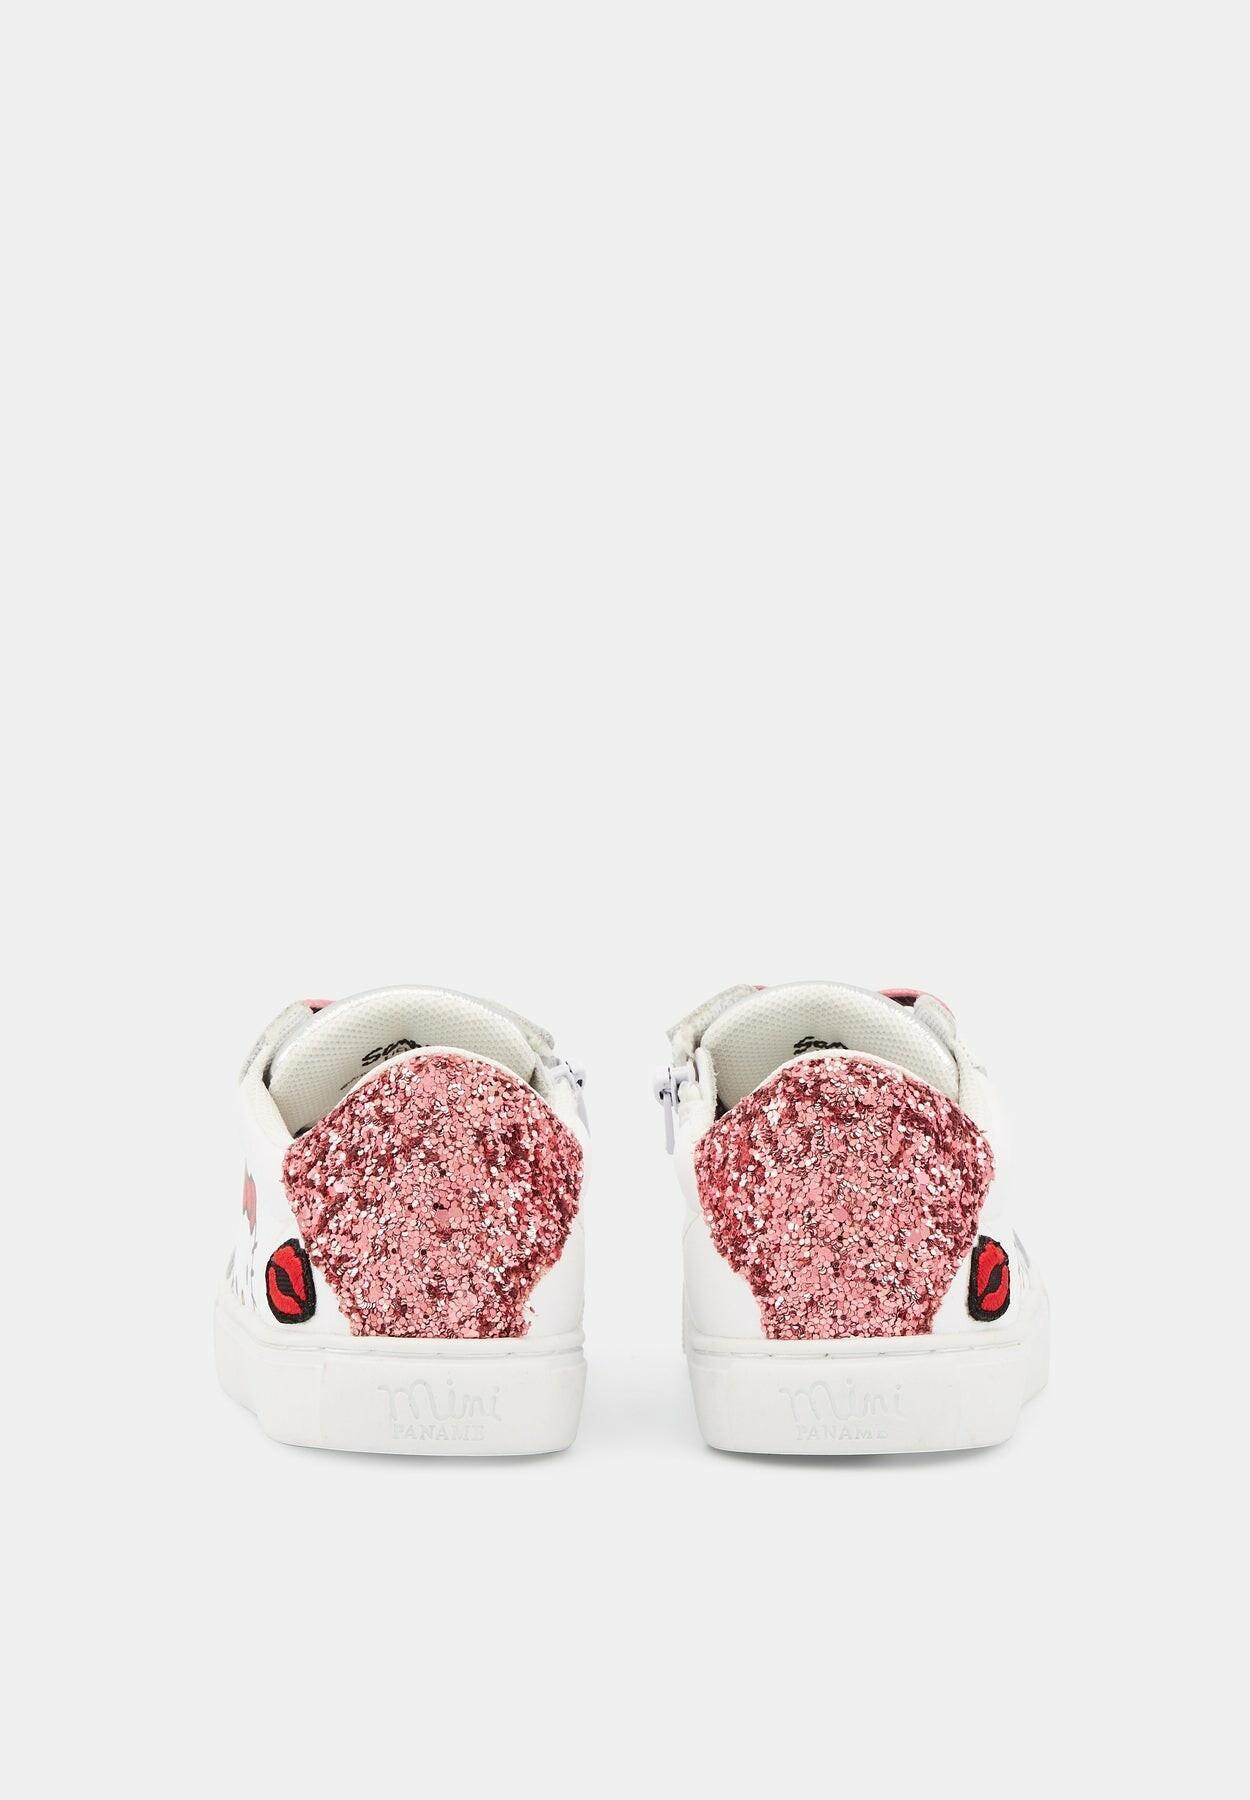 Girl sneakers Bons Baisers de Paname Mini Simone Hello Kitty - Glitter Rose